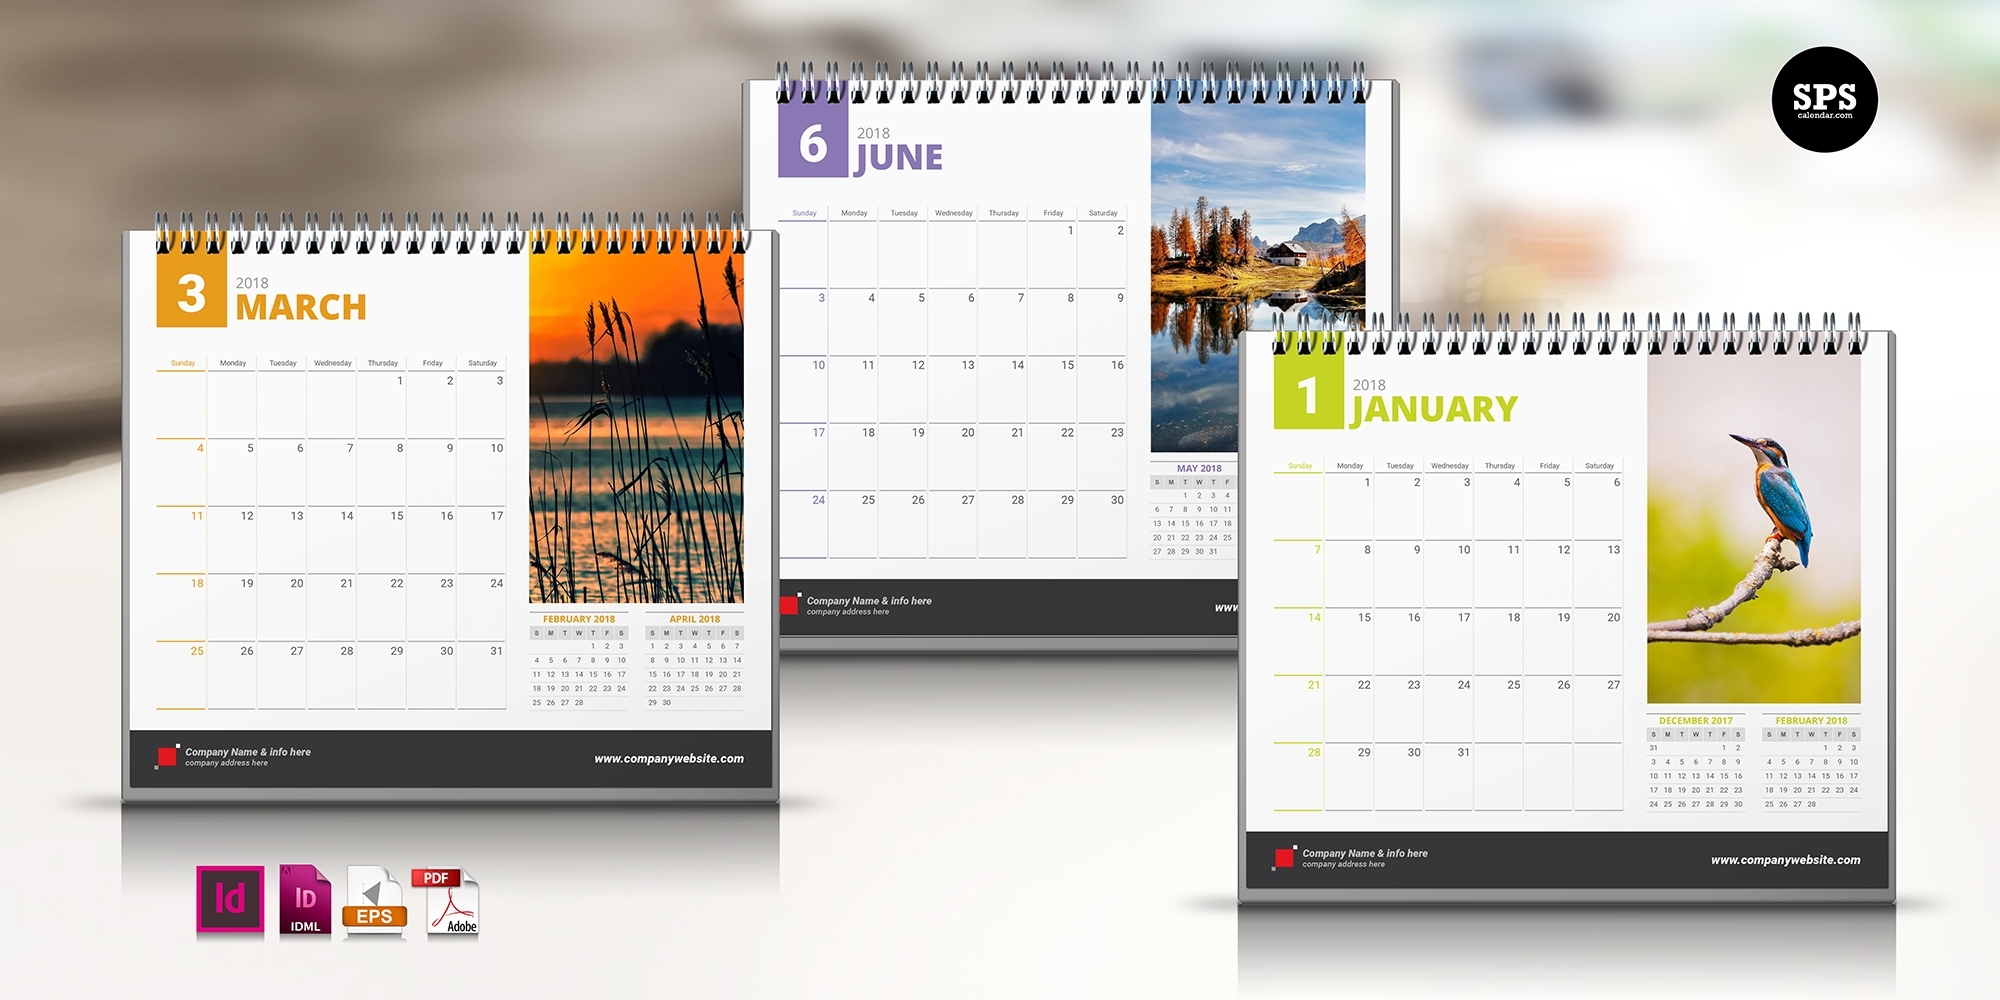 Free 2018 Indesign Calendar Template - Desk 01 - Spscalendar Calendar Template For Indesign